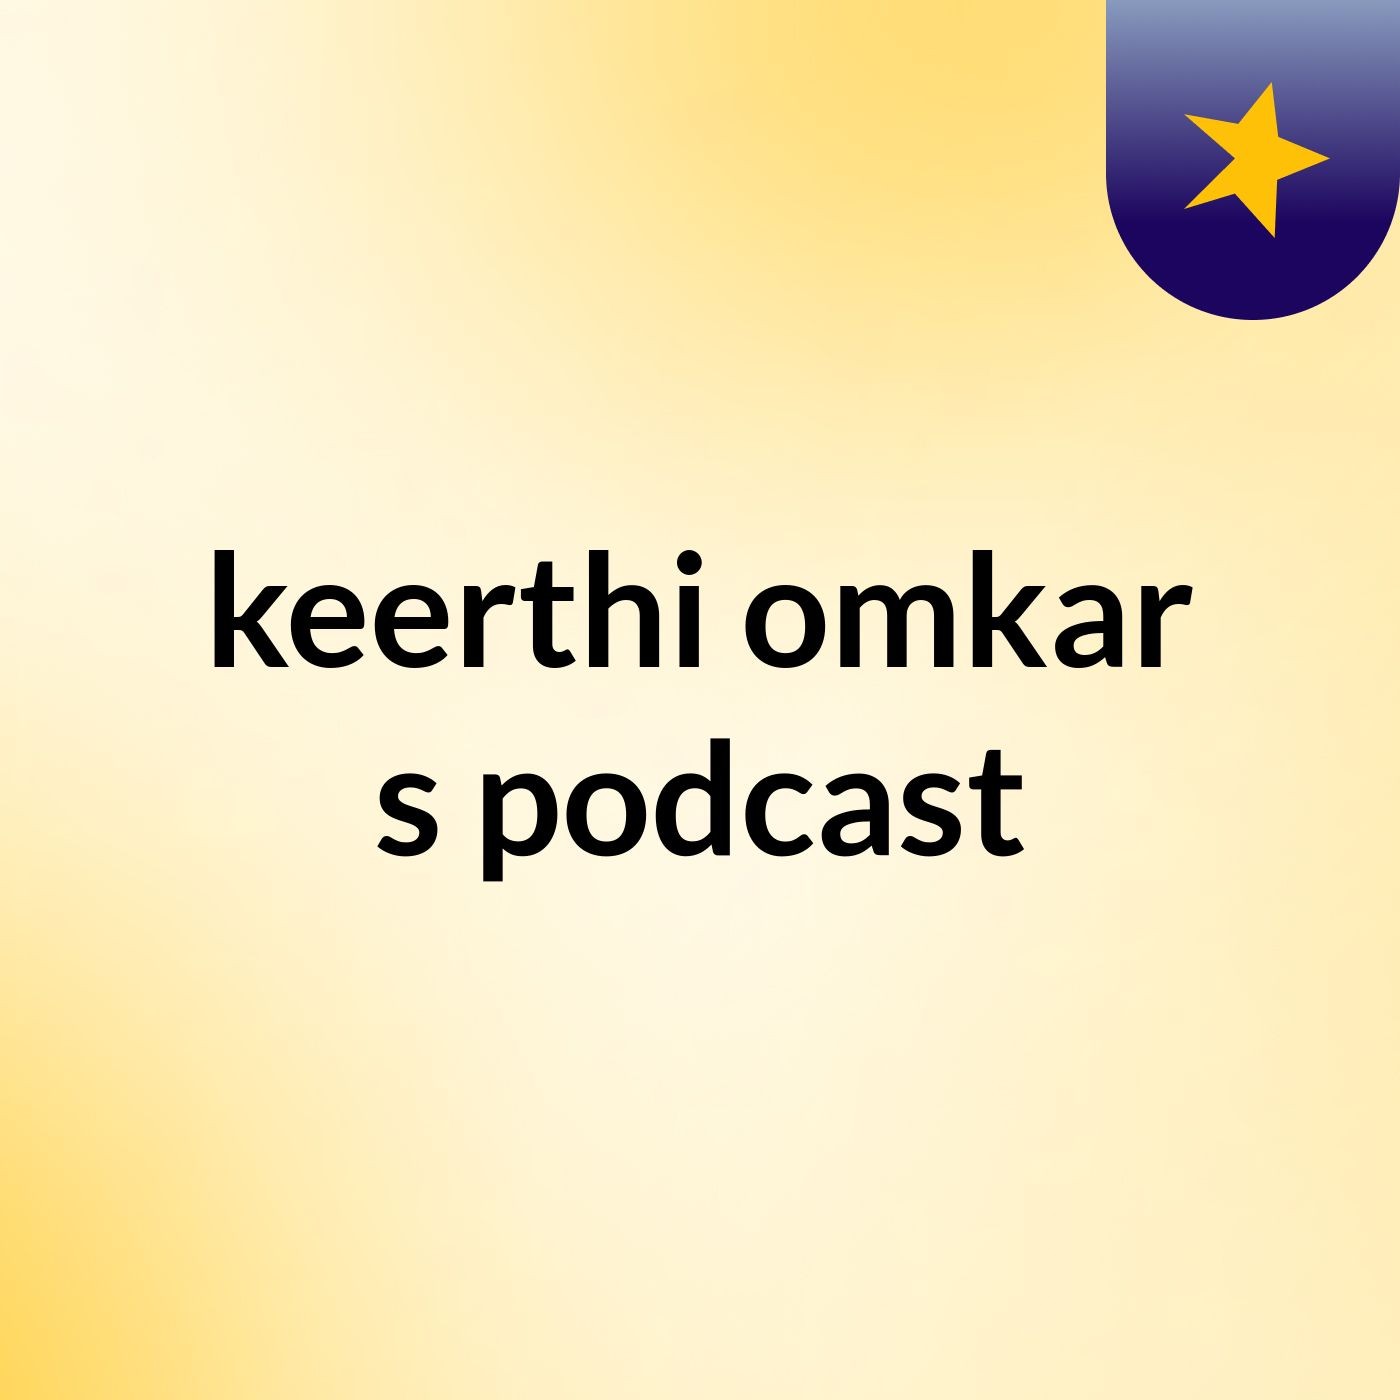 keerthi omkar's podcast